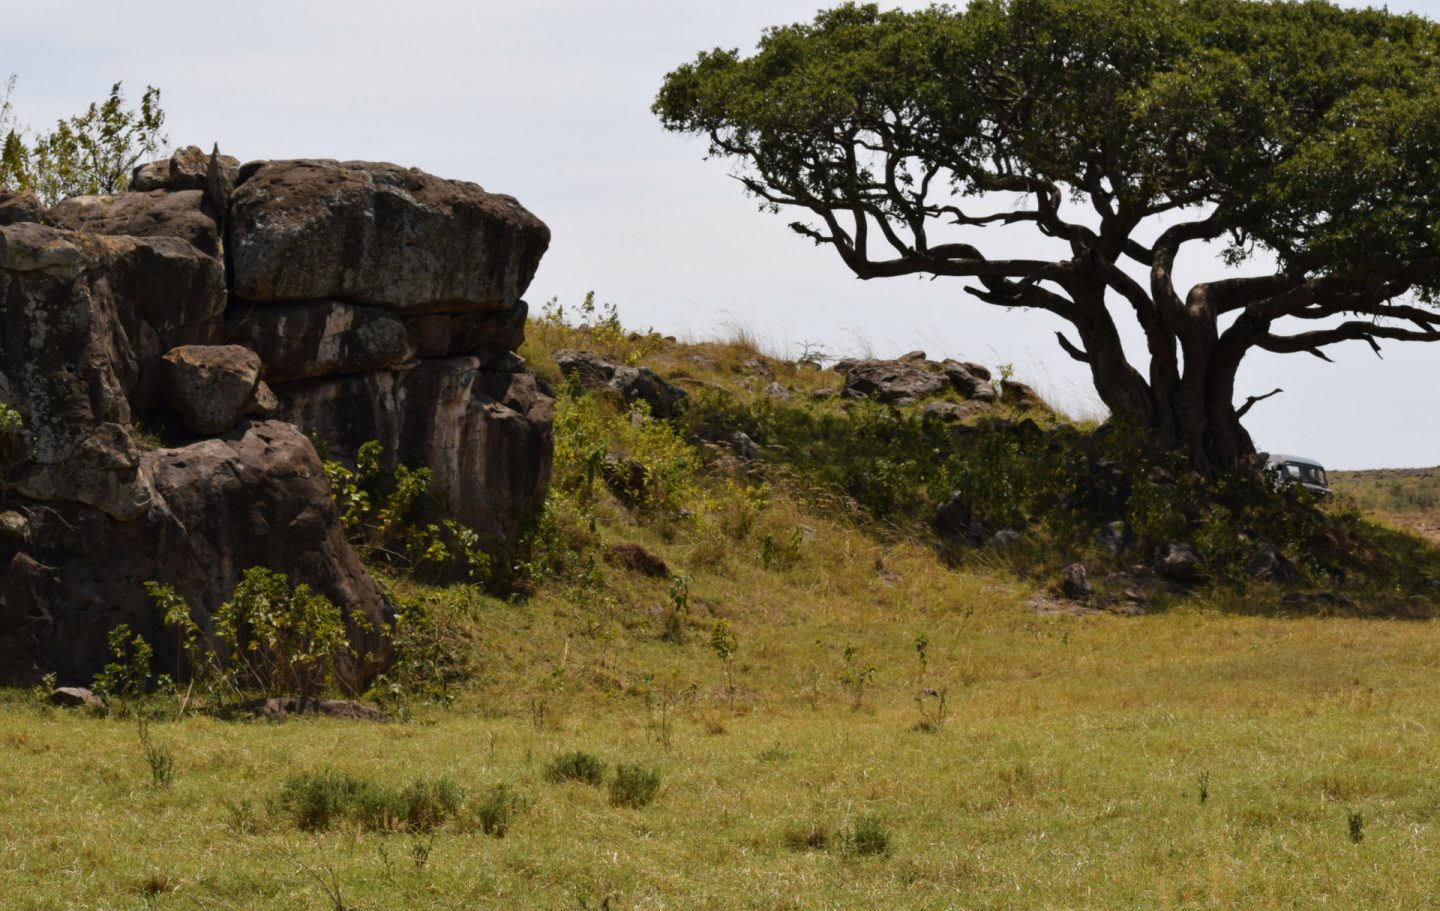 Tusk Trust - Maasai Mara Wildlife Conservation Association